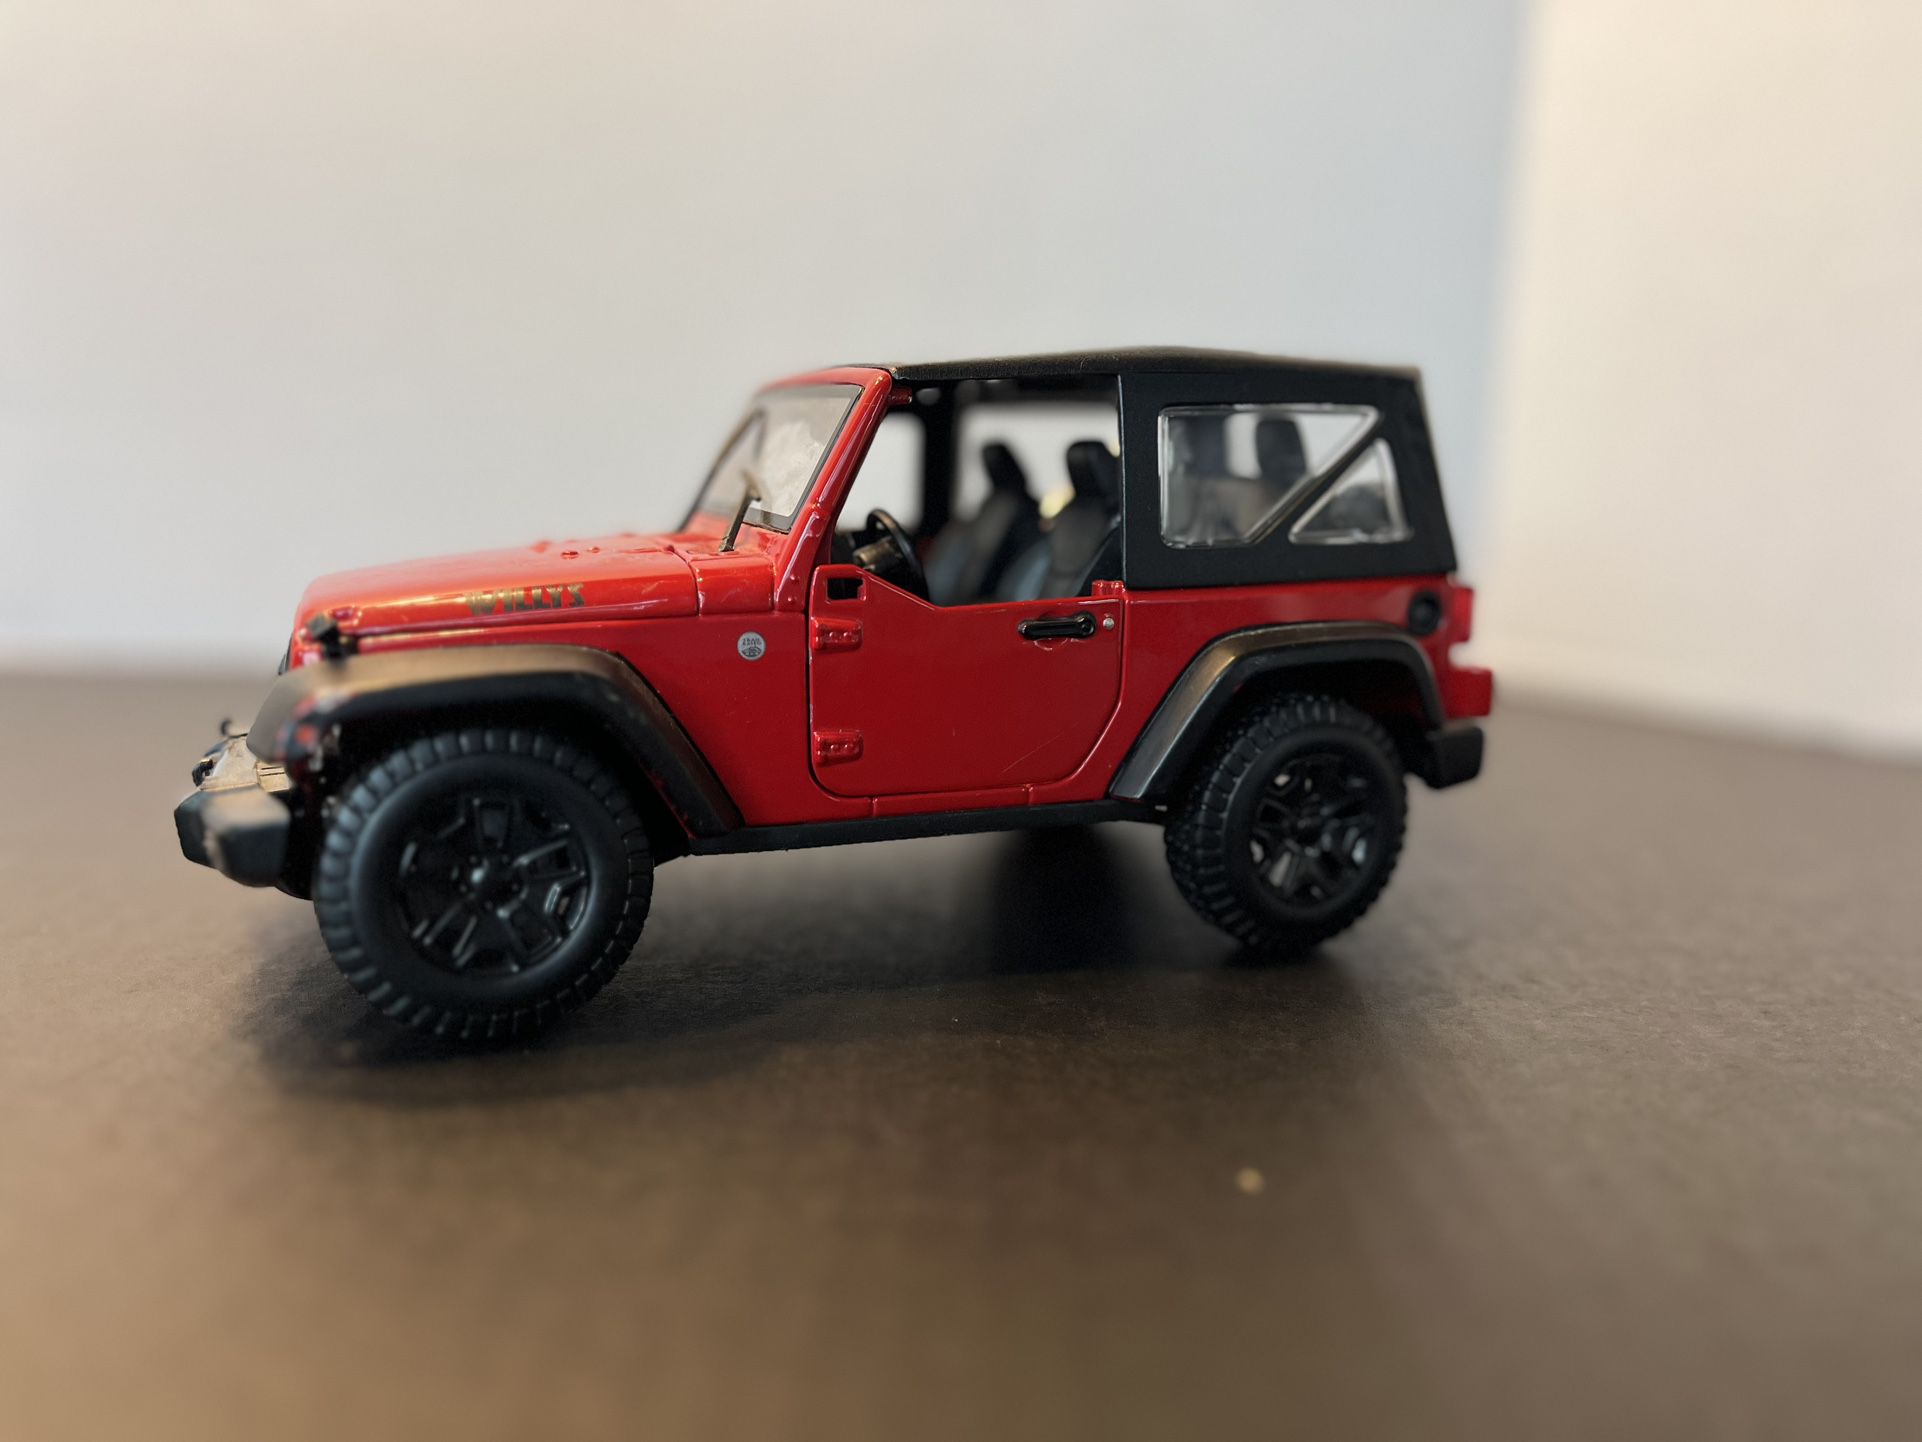 1/18 Maisto Jeep Wrangler model